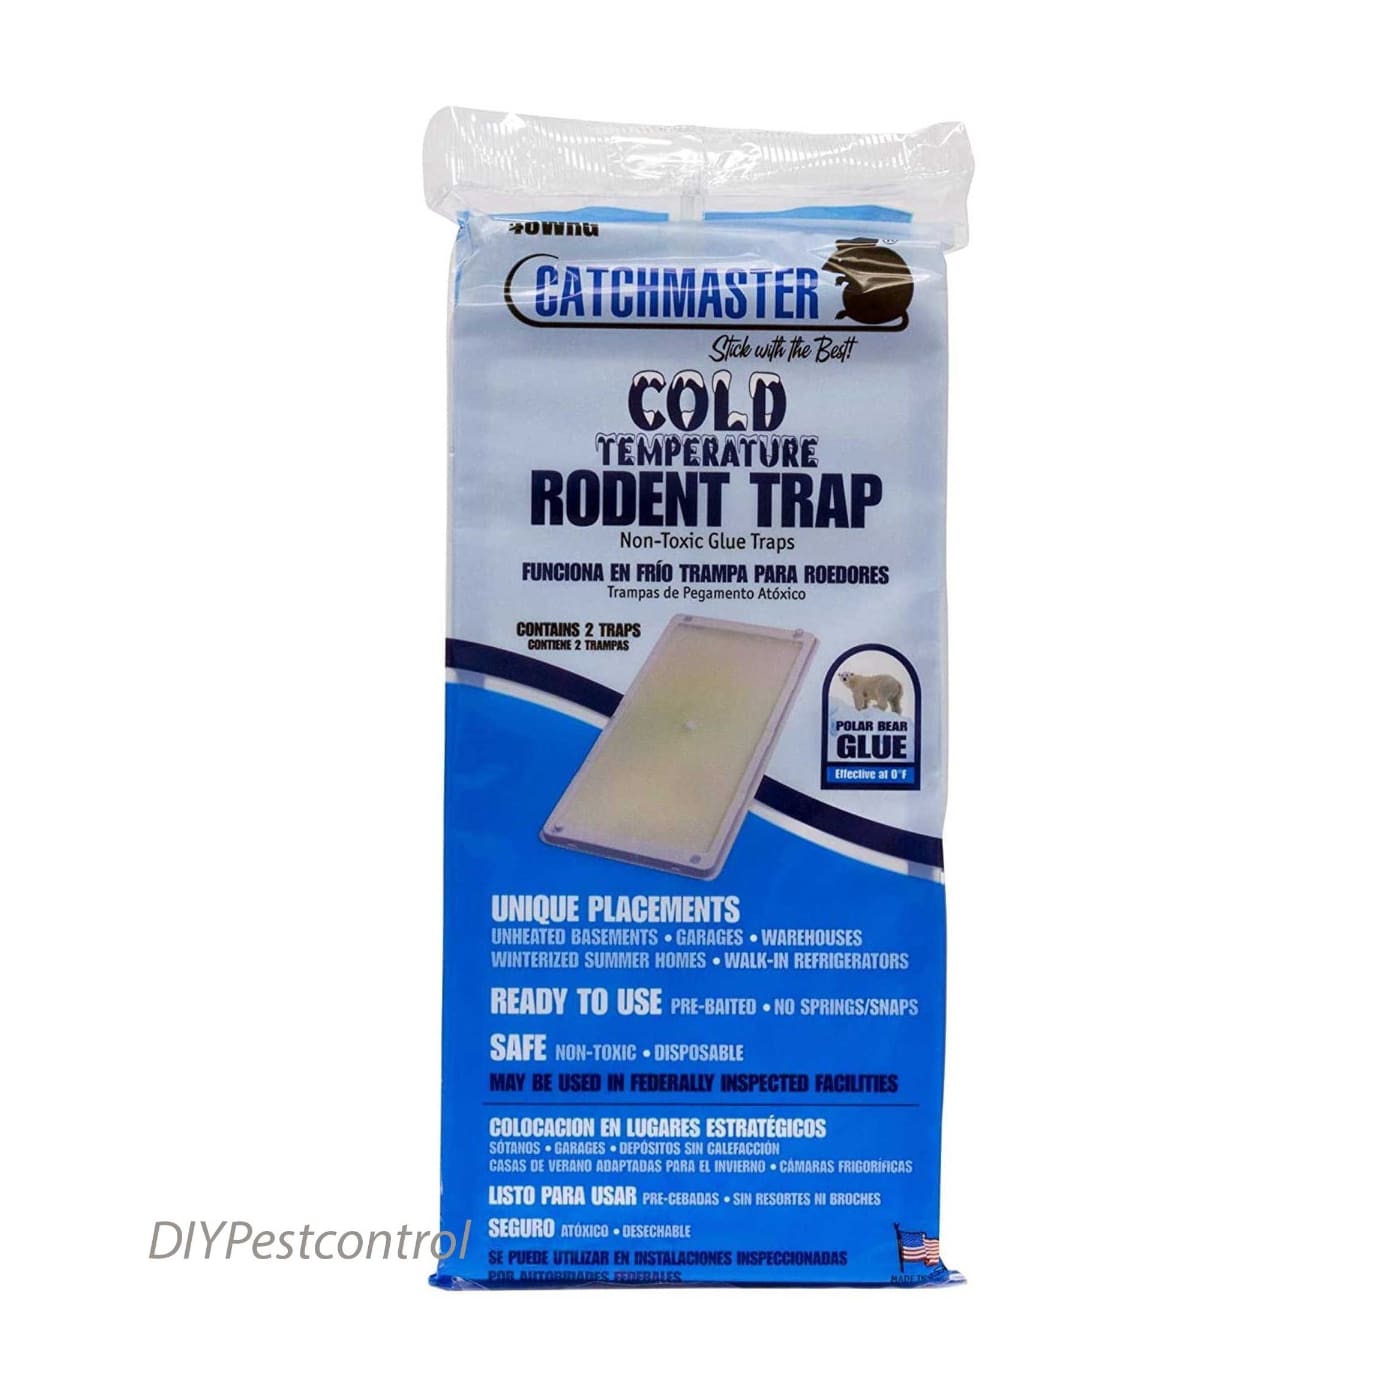 Catchmaster Large Rat & Snake Glue Traps - K. K. Discount Store